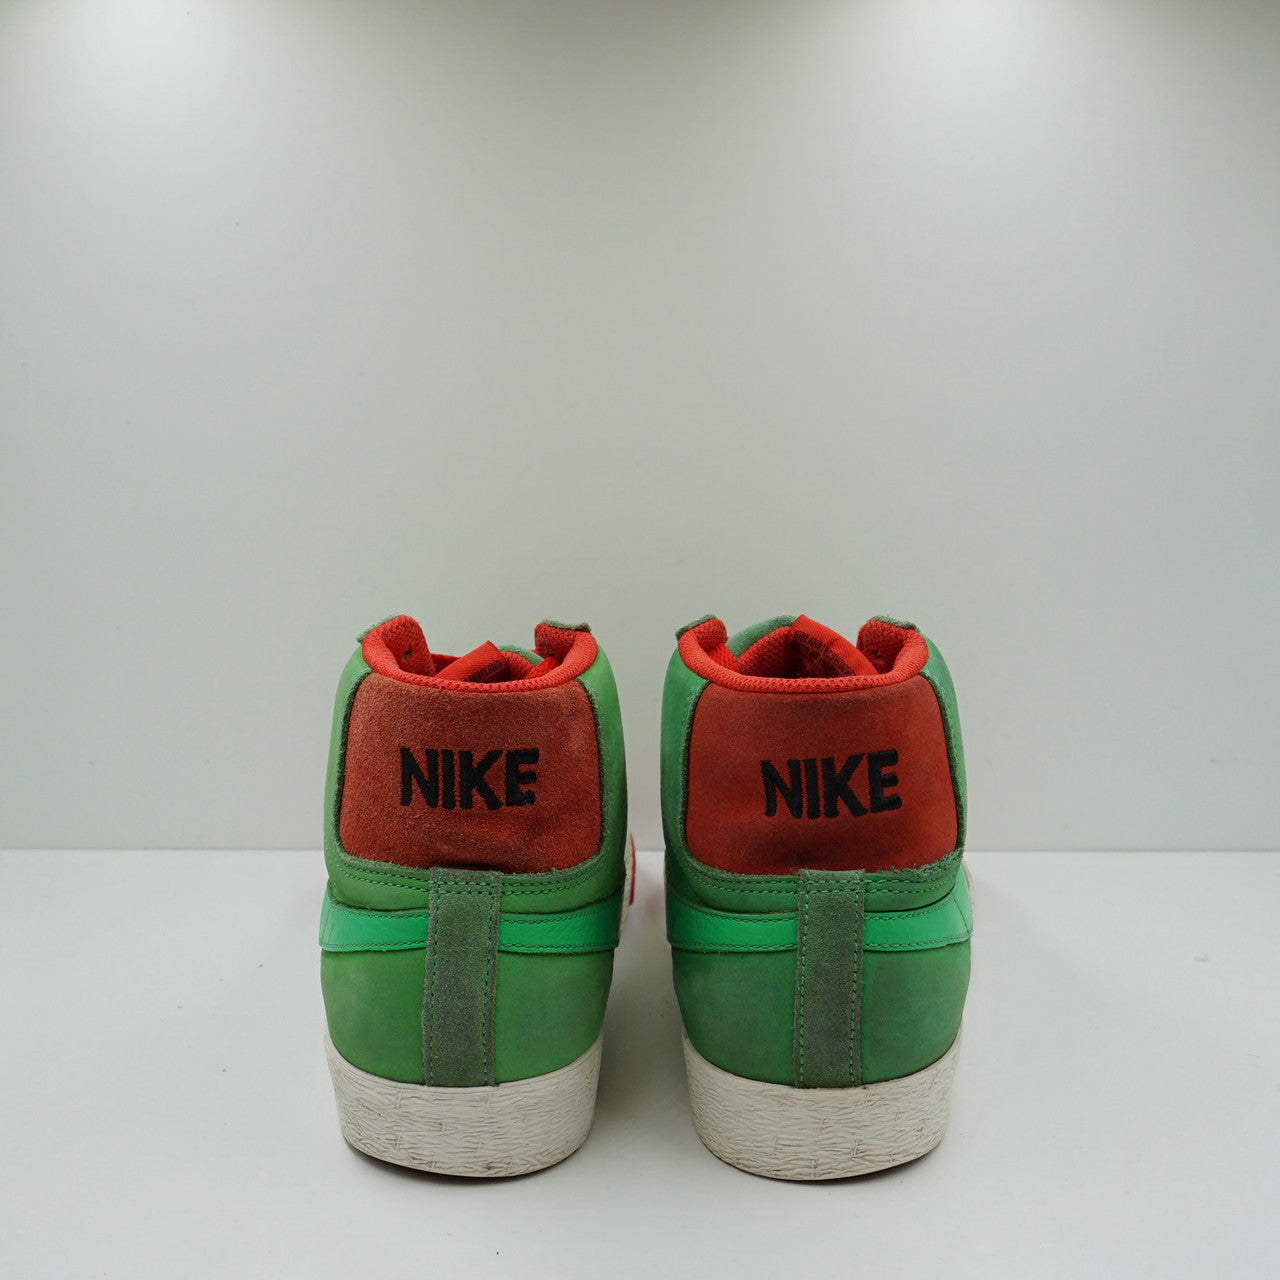 Nike SB Blazer Green Spark Pimento